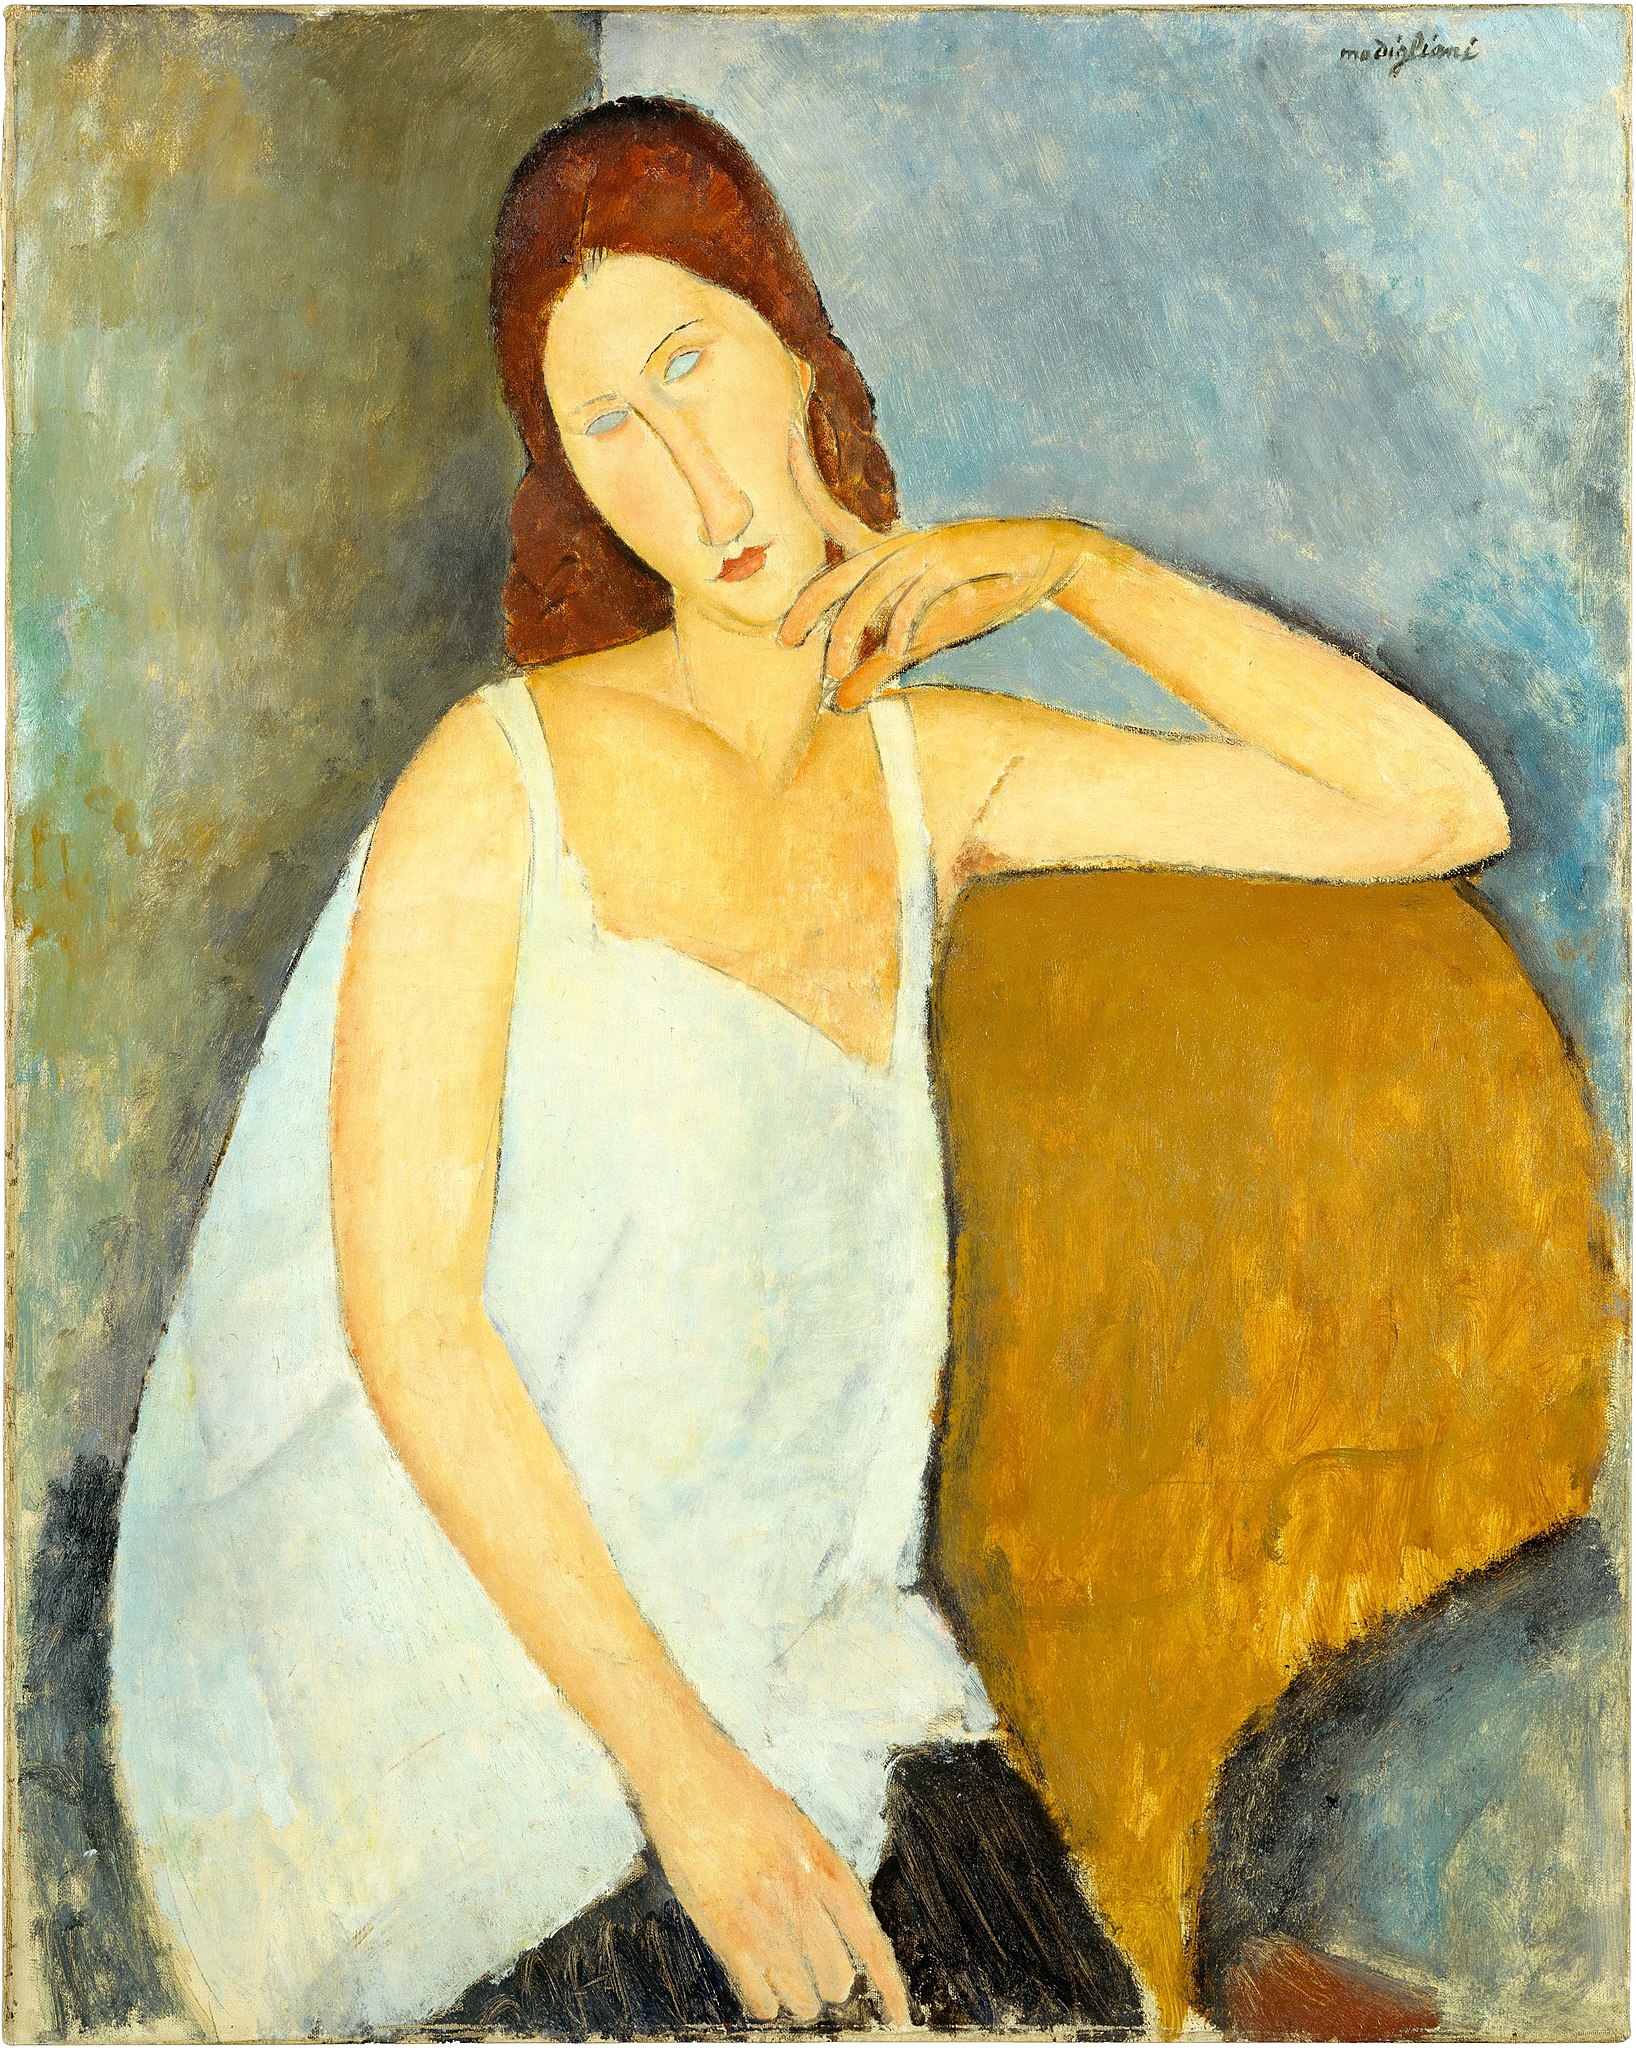 Jeanne Hébuterne by Amedeo Modigliani - 1919 - 91.4 x 73 cm Metropolitan Museum of Art